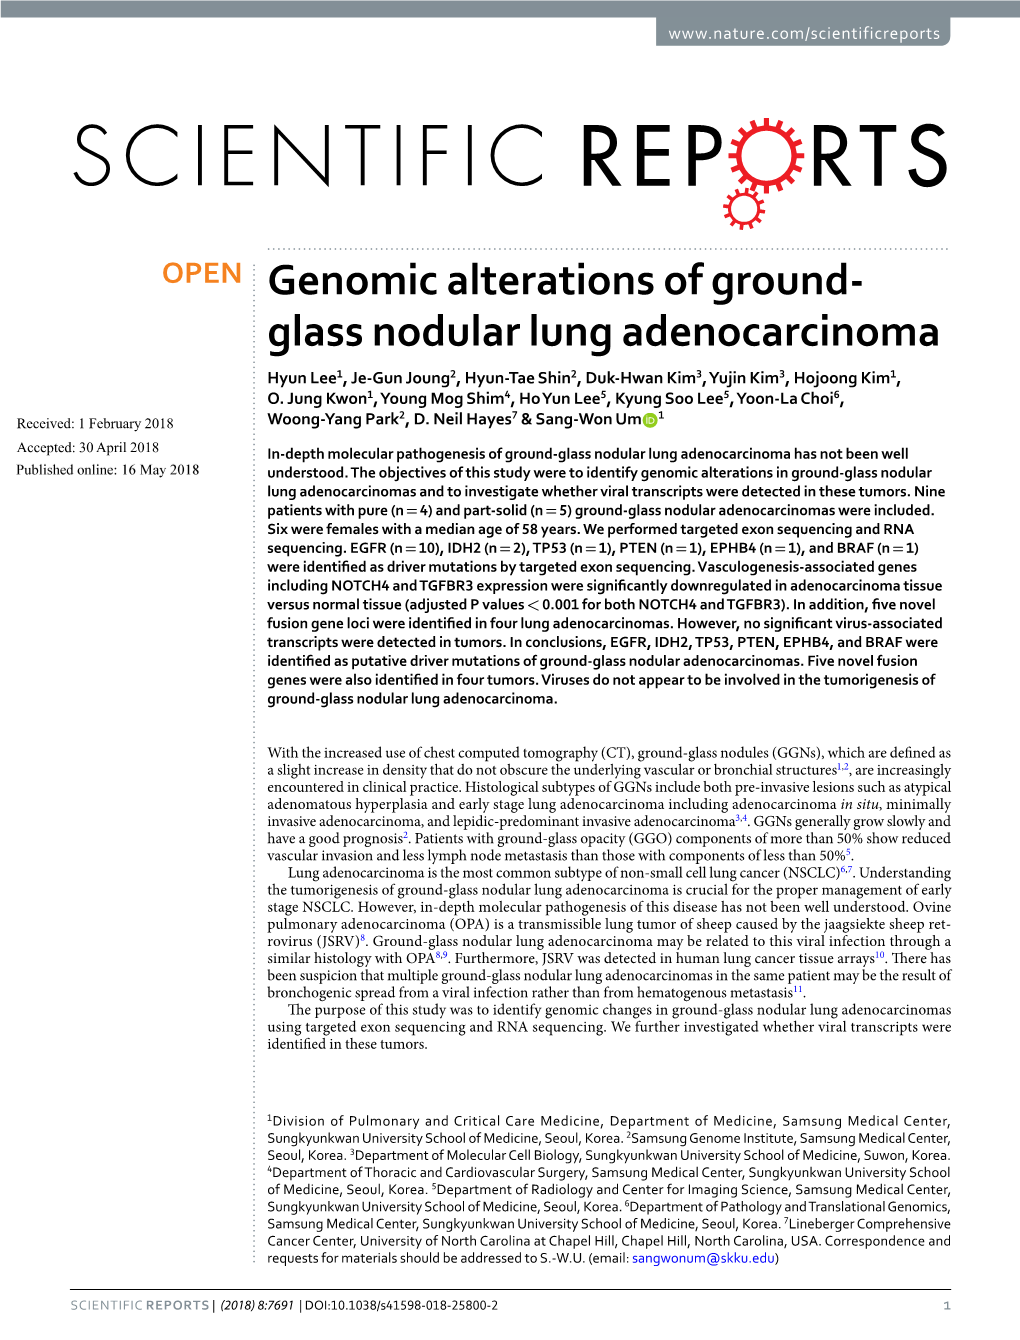 Genomic Alterations of Ground-Glass Nodular Lung Adenocarcinoma